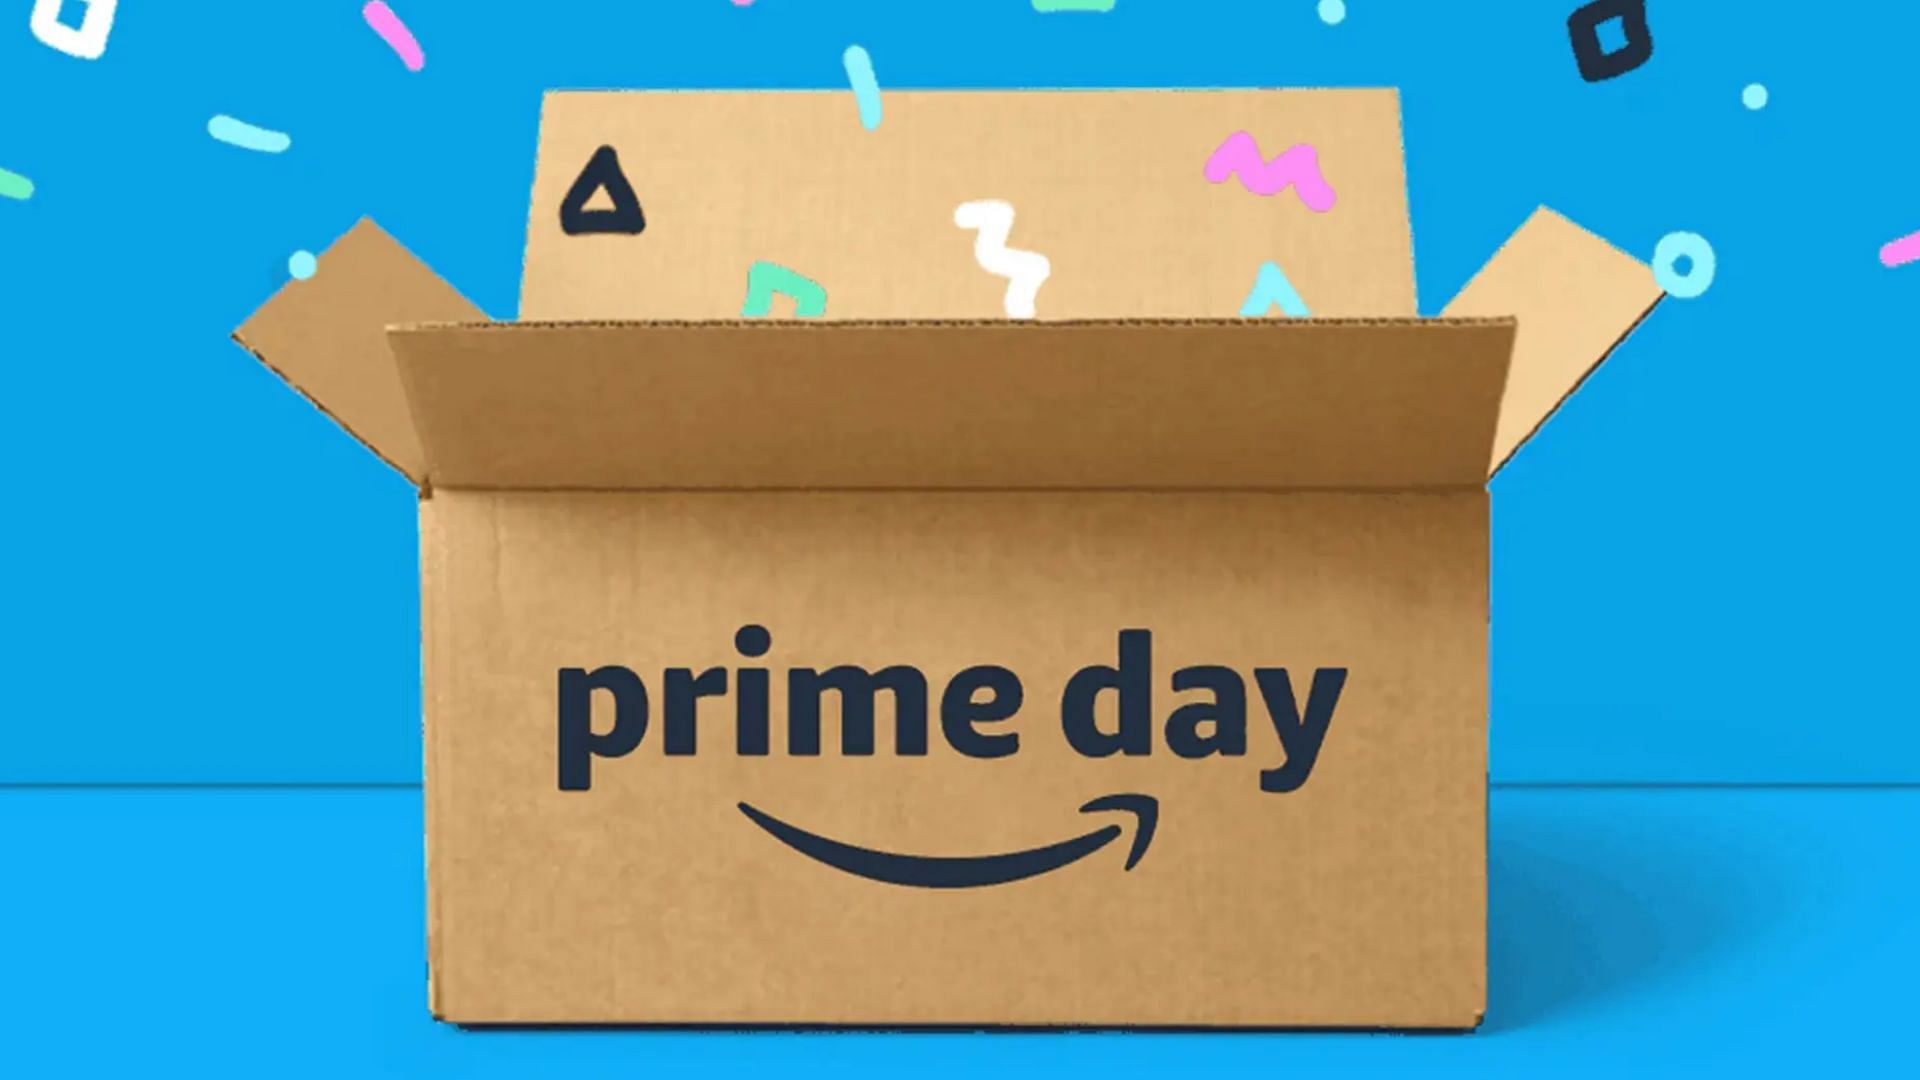 Amazon Prime Day begins this week (Image via Amazon)